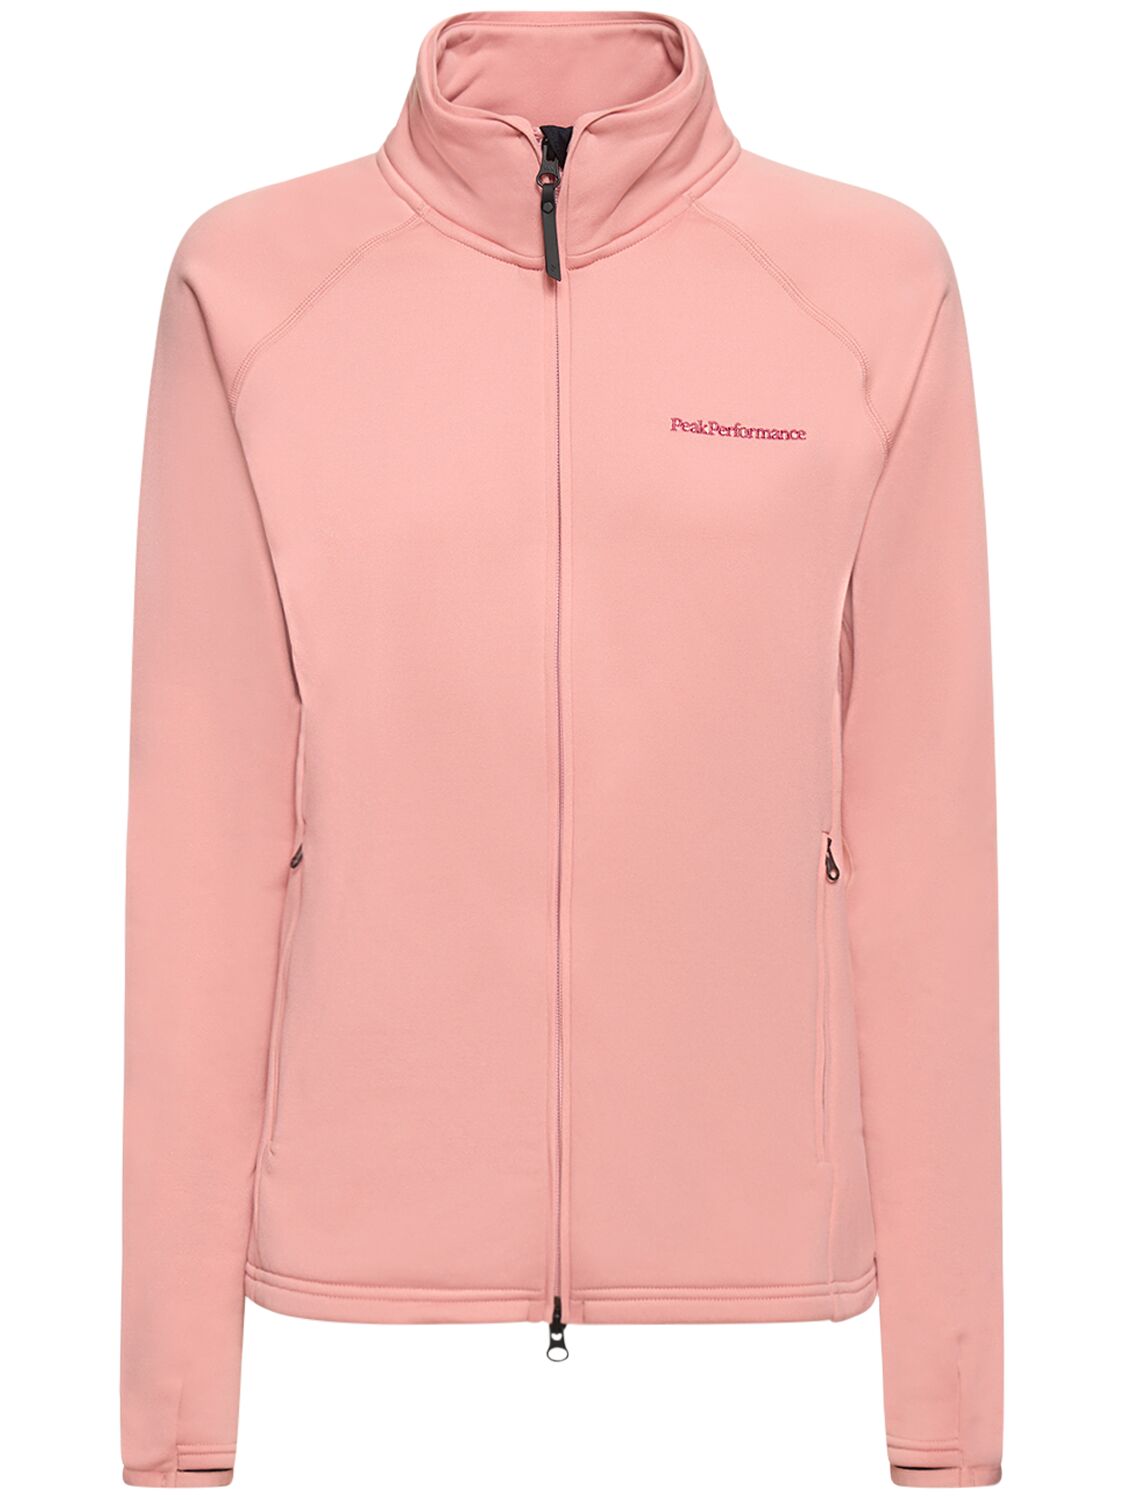 Peak Performance Chill Lightweight Tech Zip Jacket In Pink